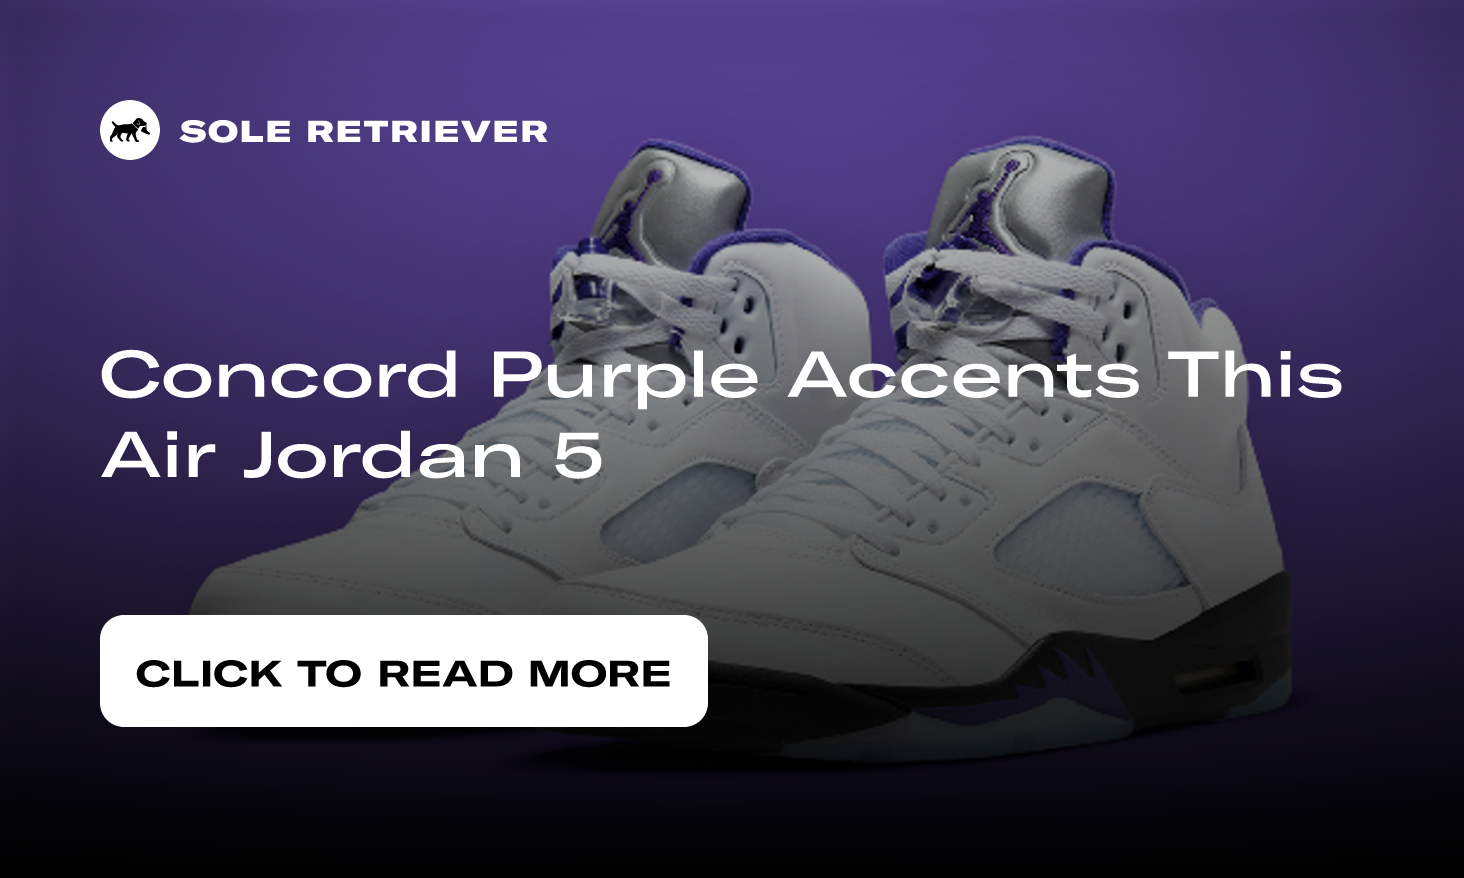 Concord Purple Accents This Air Jordan 5